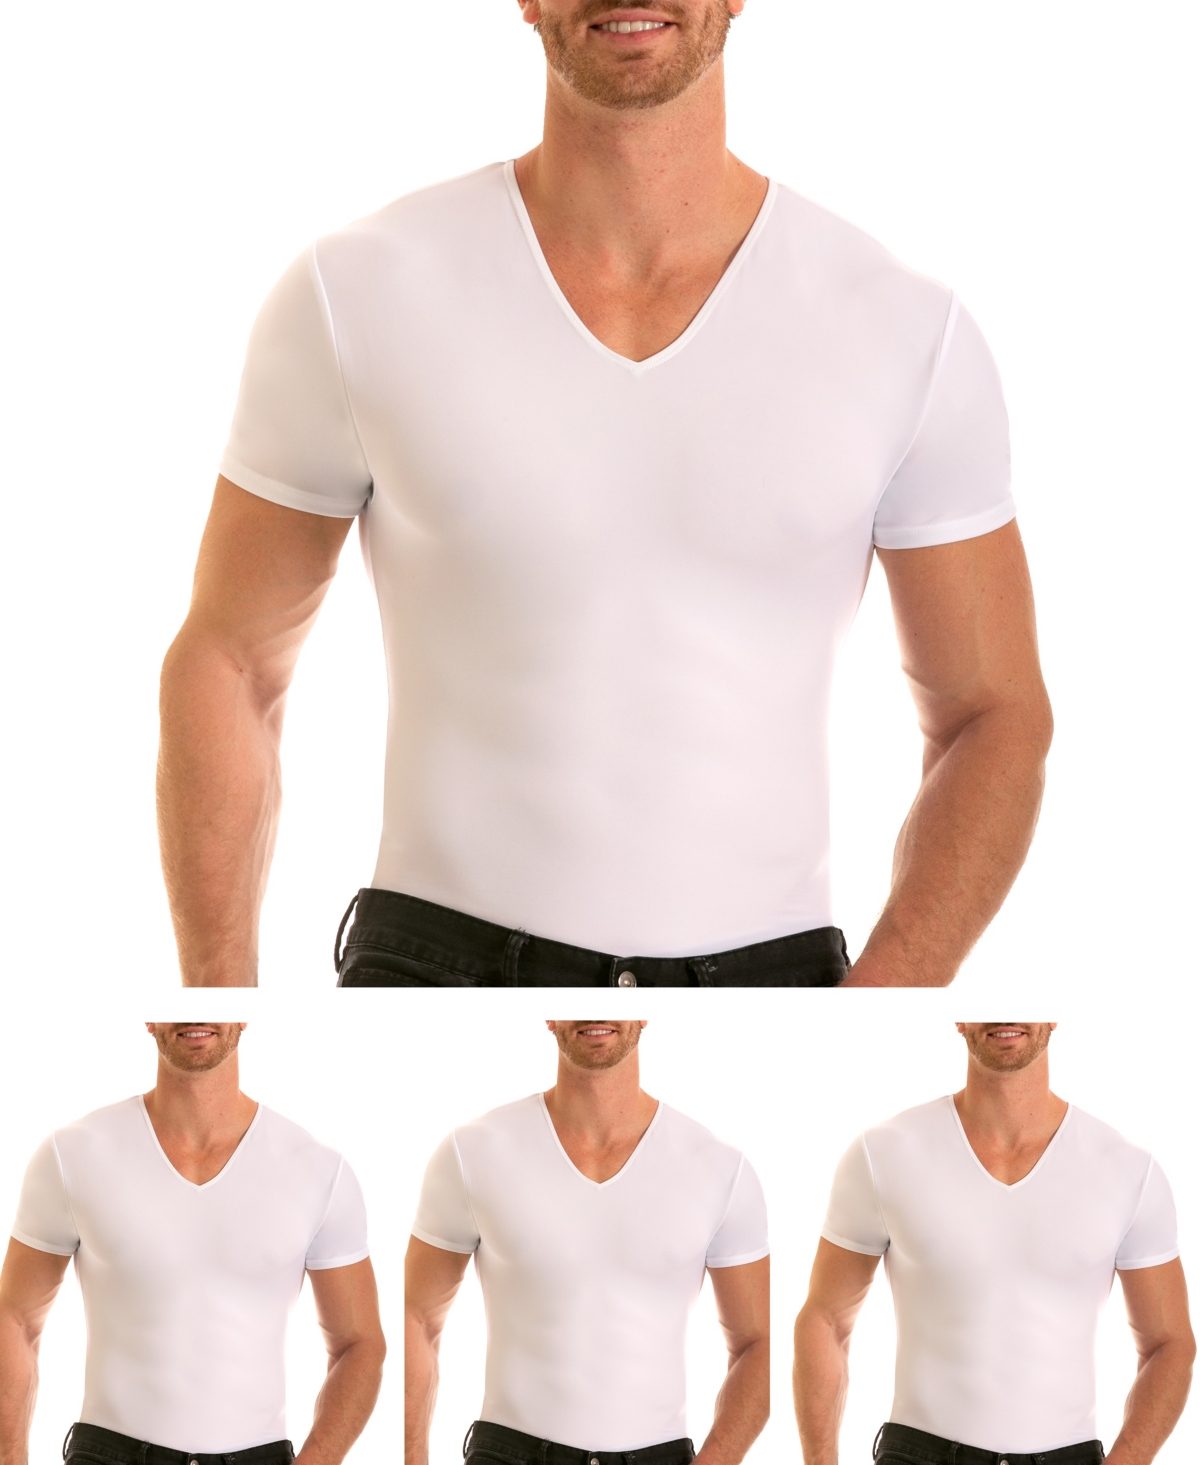 Men's Big & Tall Insta Slim 3 Pack Compression Short Sleeve V-Neck T-Shirts - White